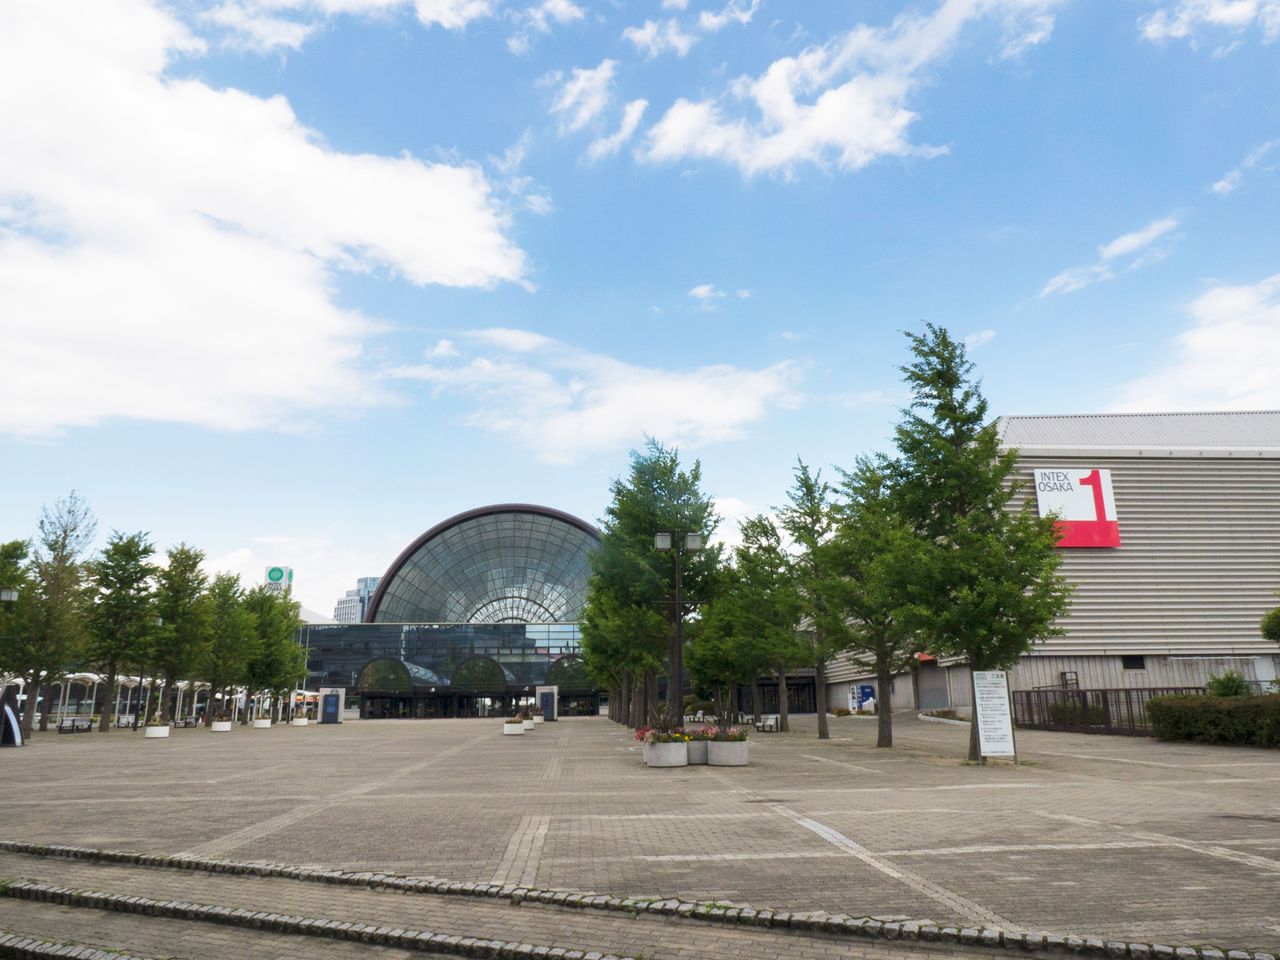 Intex Osaka, the venue for the G20 Summit.